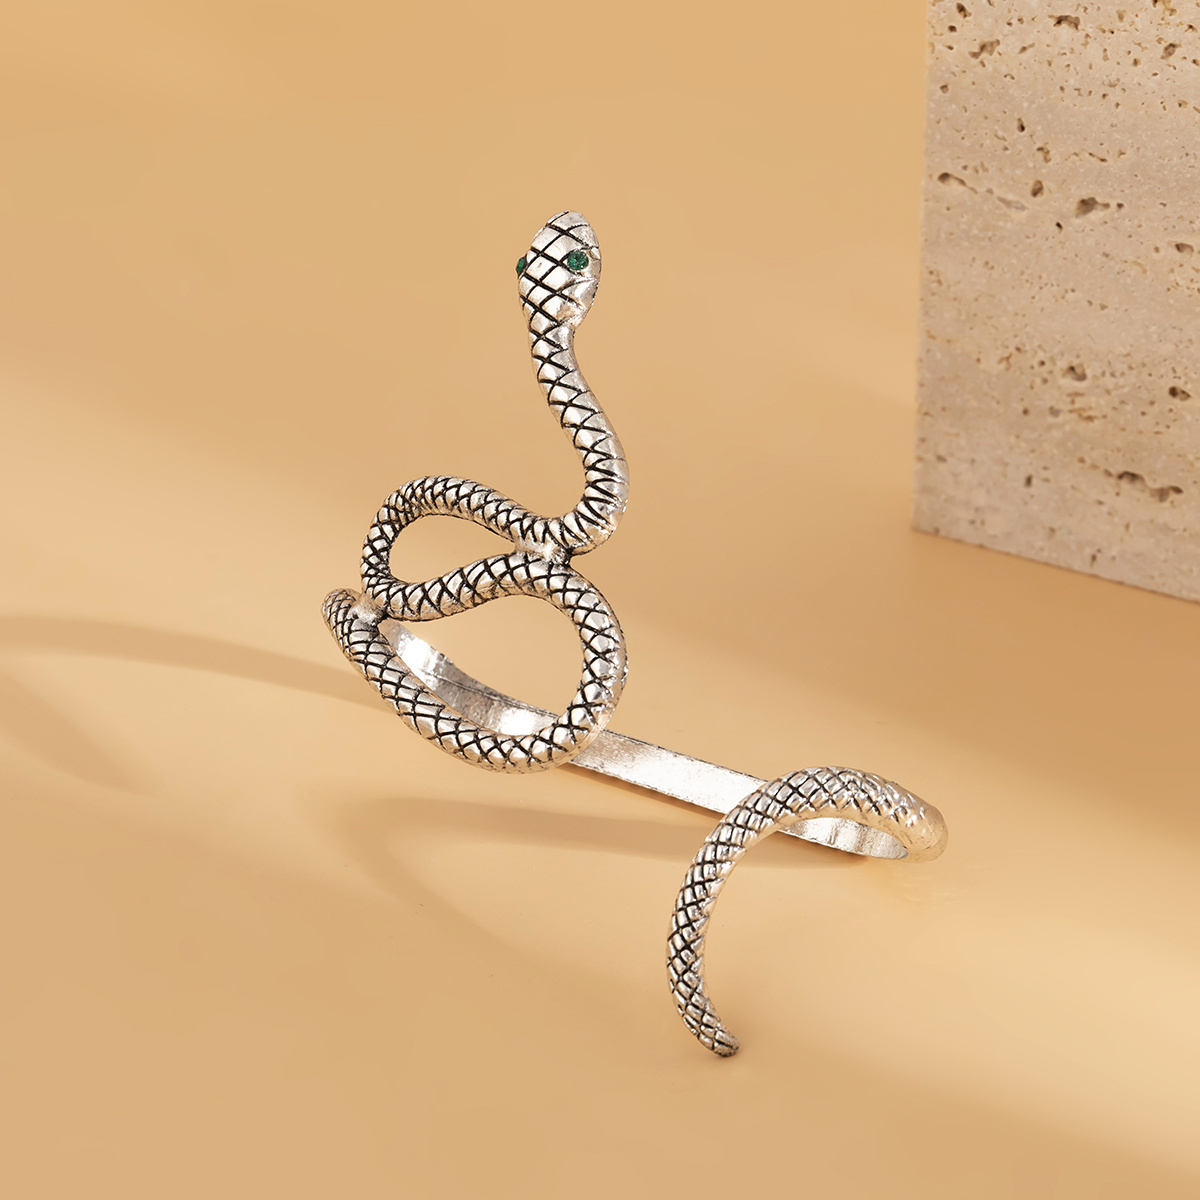 Maxi New Fashion Bracelet Shiny Punk Snake Bracelet Personalized Vintage  Diamond Snake Bracelet For Chic Girls From Maxi, $2.04